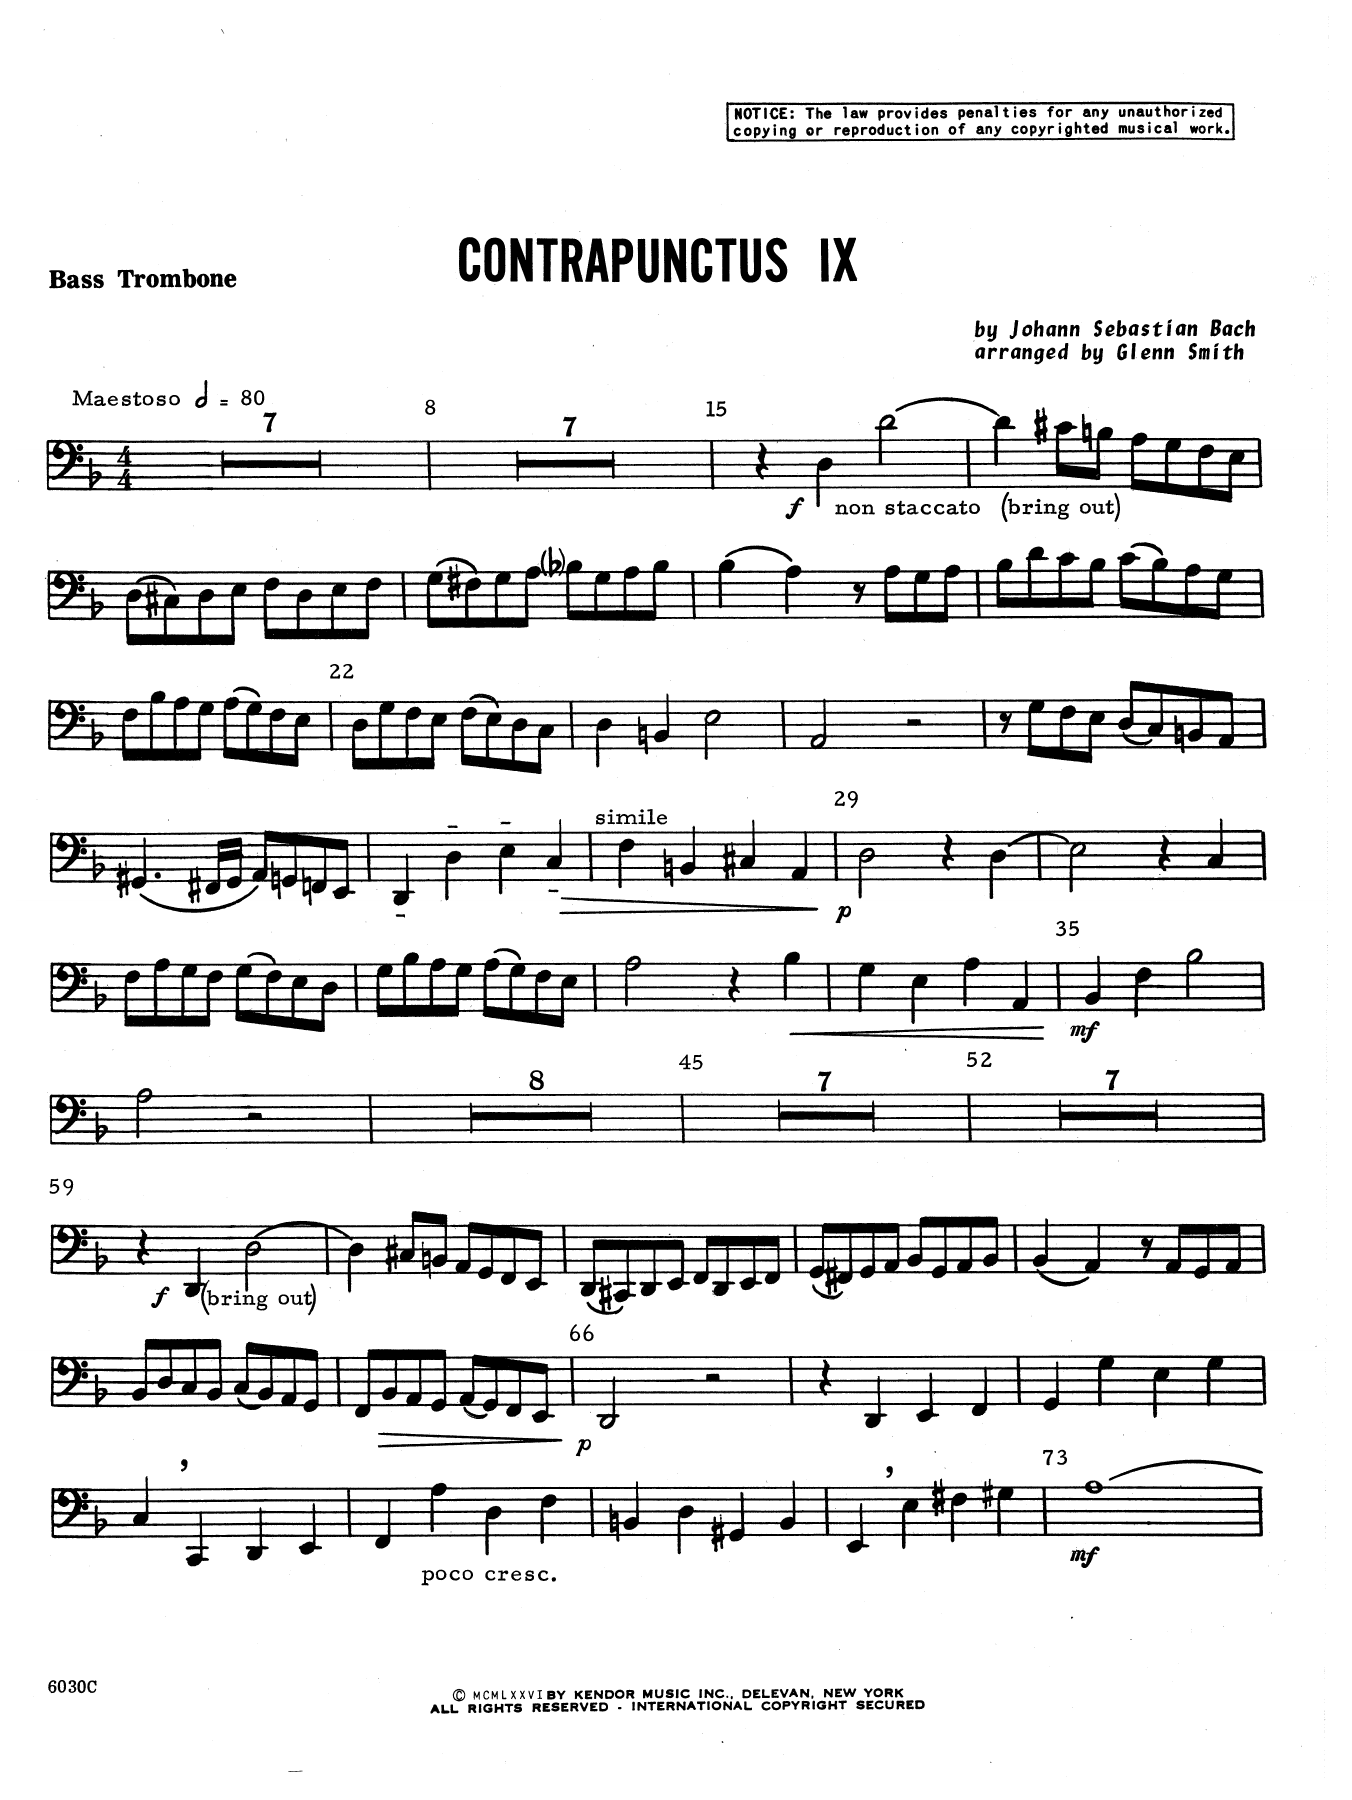 Download Glen Smith Contrapunctus IX - Bass Trombone Sheet Music